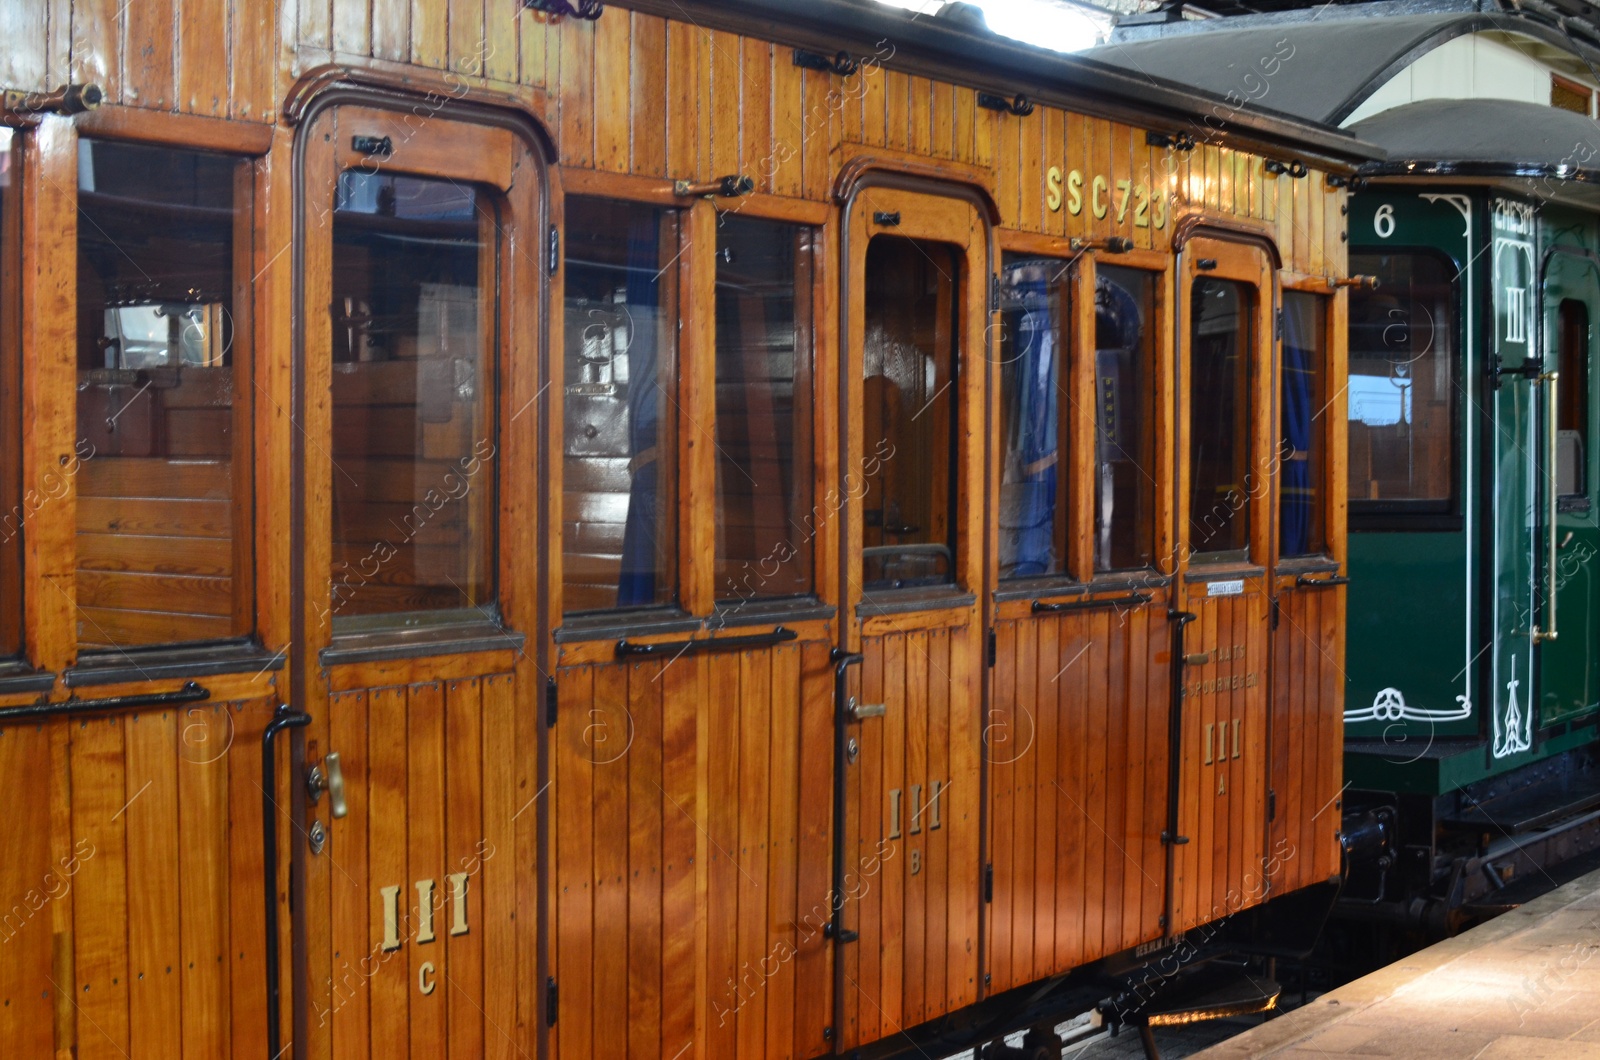 Photo of Utrecht, Netherlands - July 23, 2022: Old carriage on display in Spoorwegmuseum